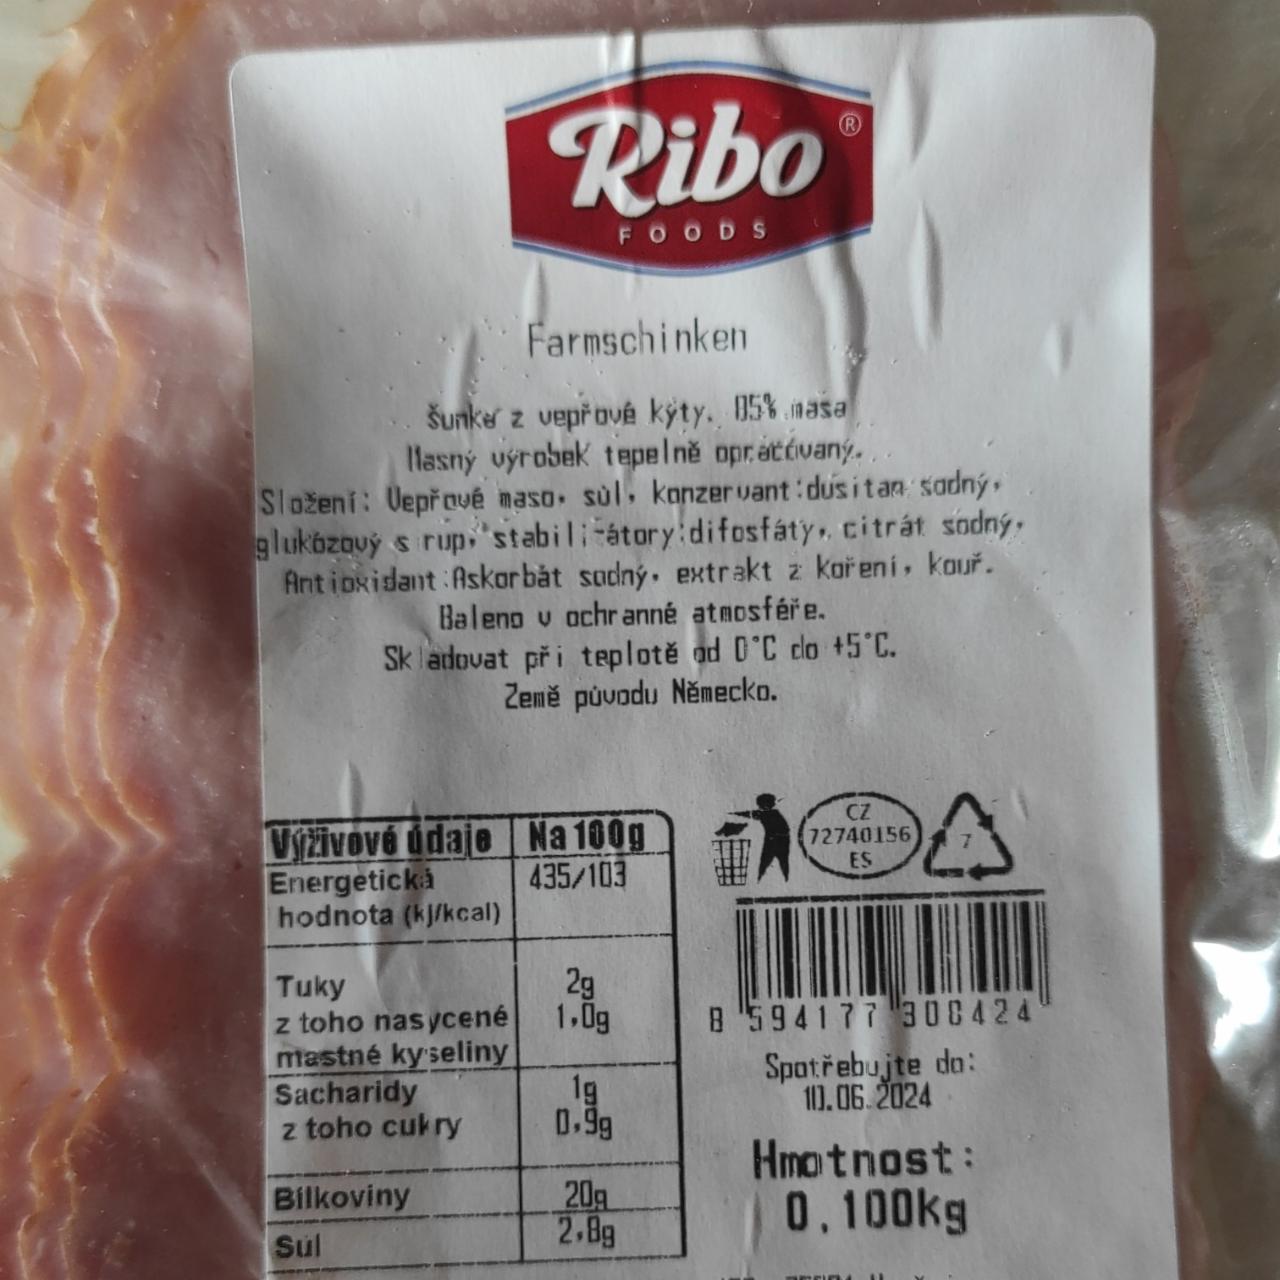 Fotografie - Farmschinken Ribo foods